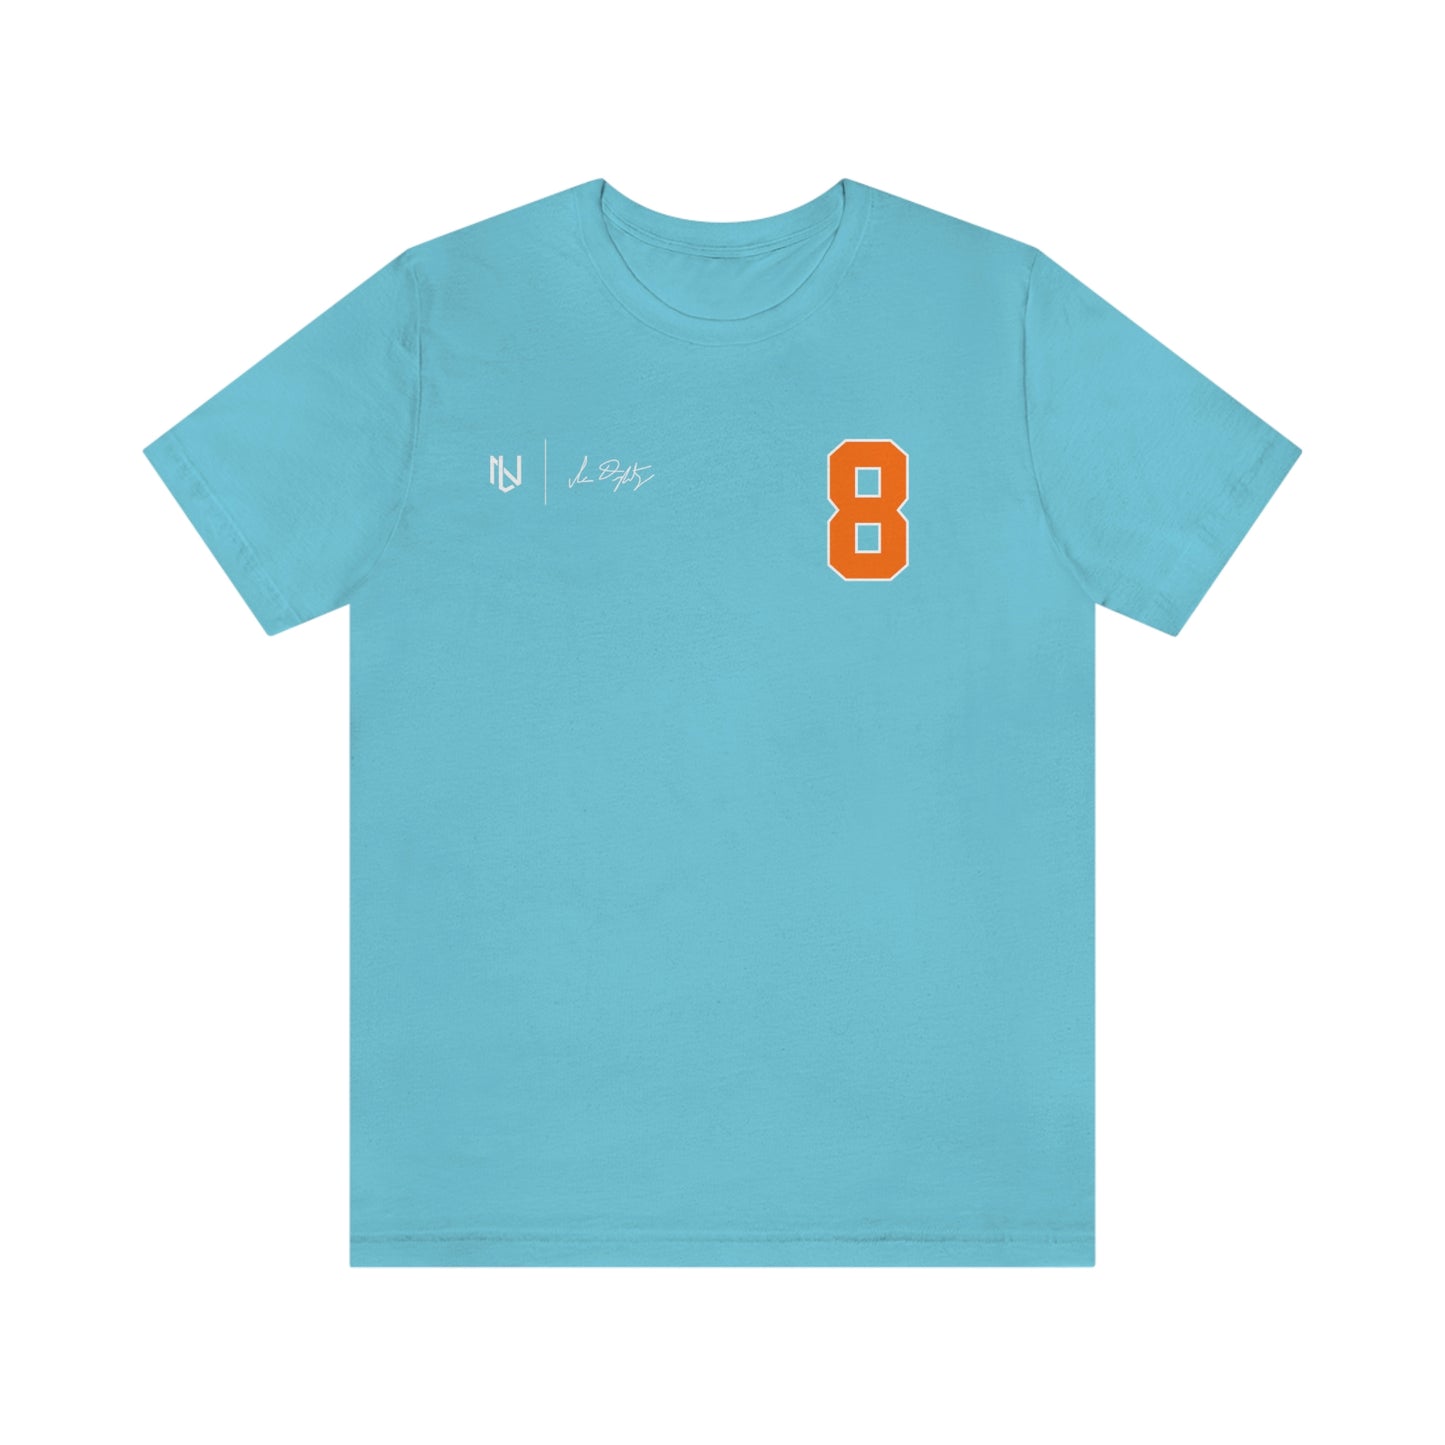 Ian Daugherty Unisex Jersey Shirt